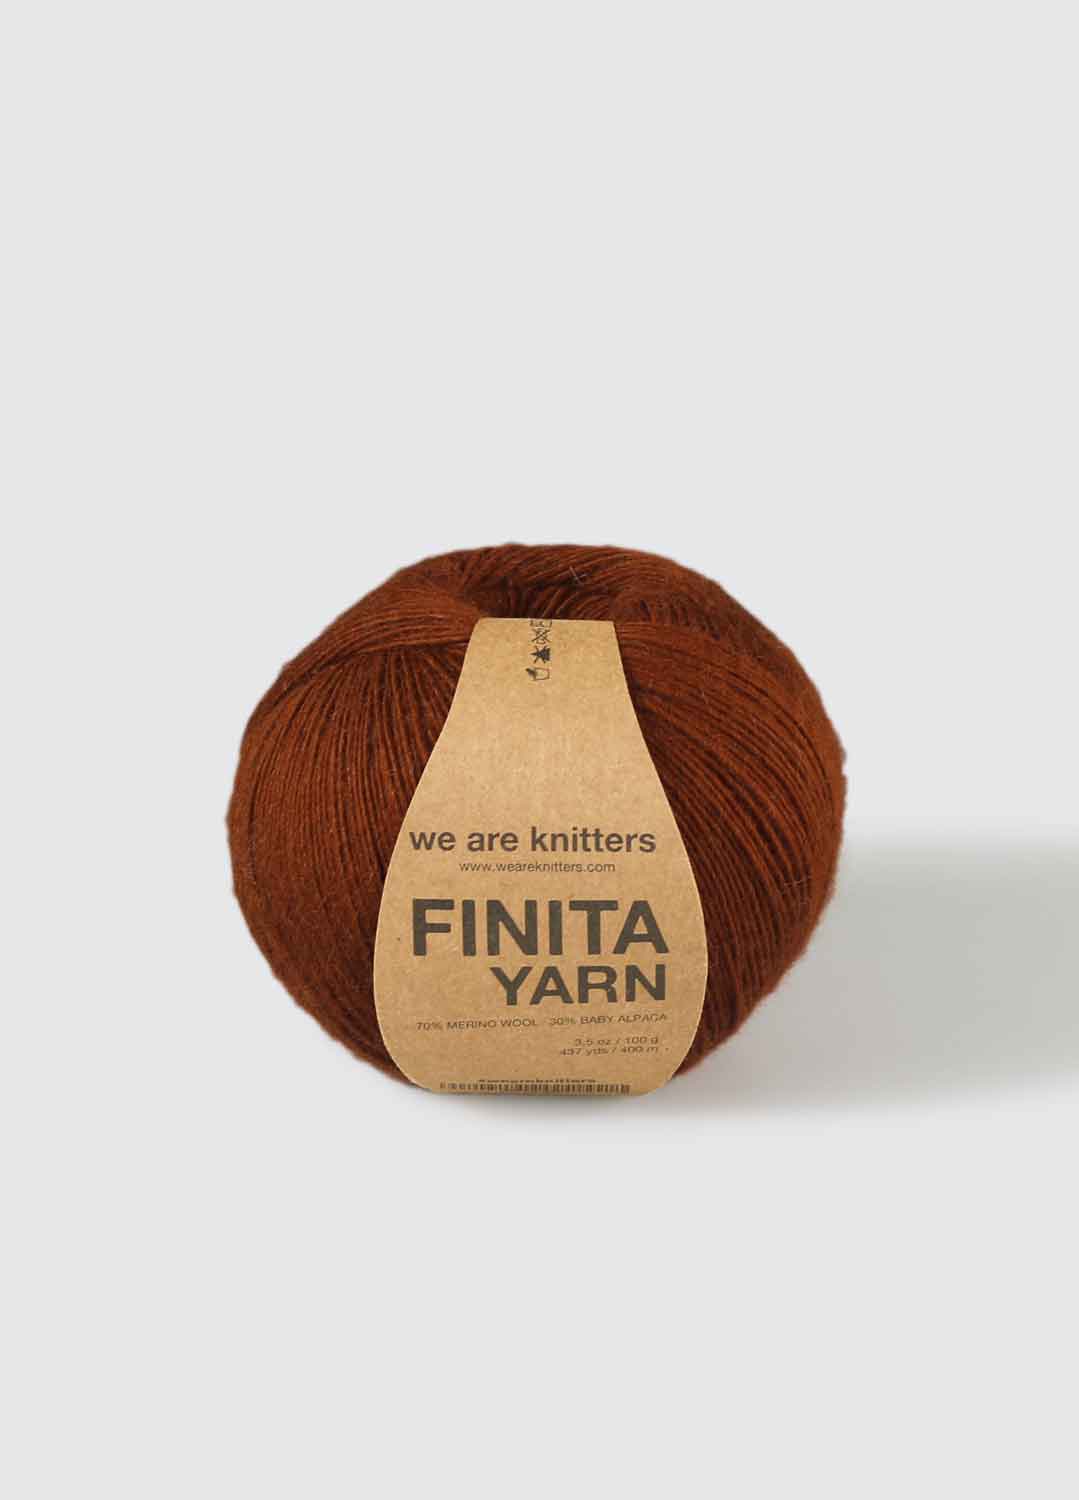 Yarn from animal fibers - Knitandnote